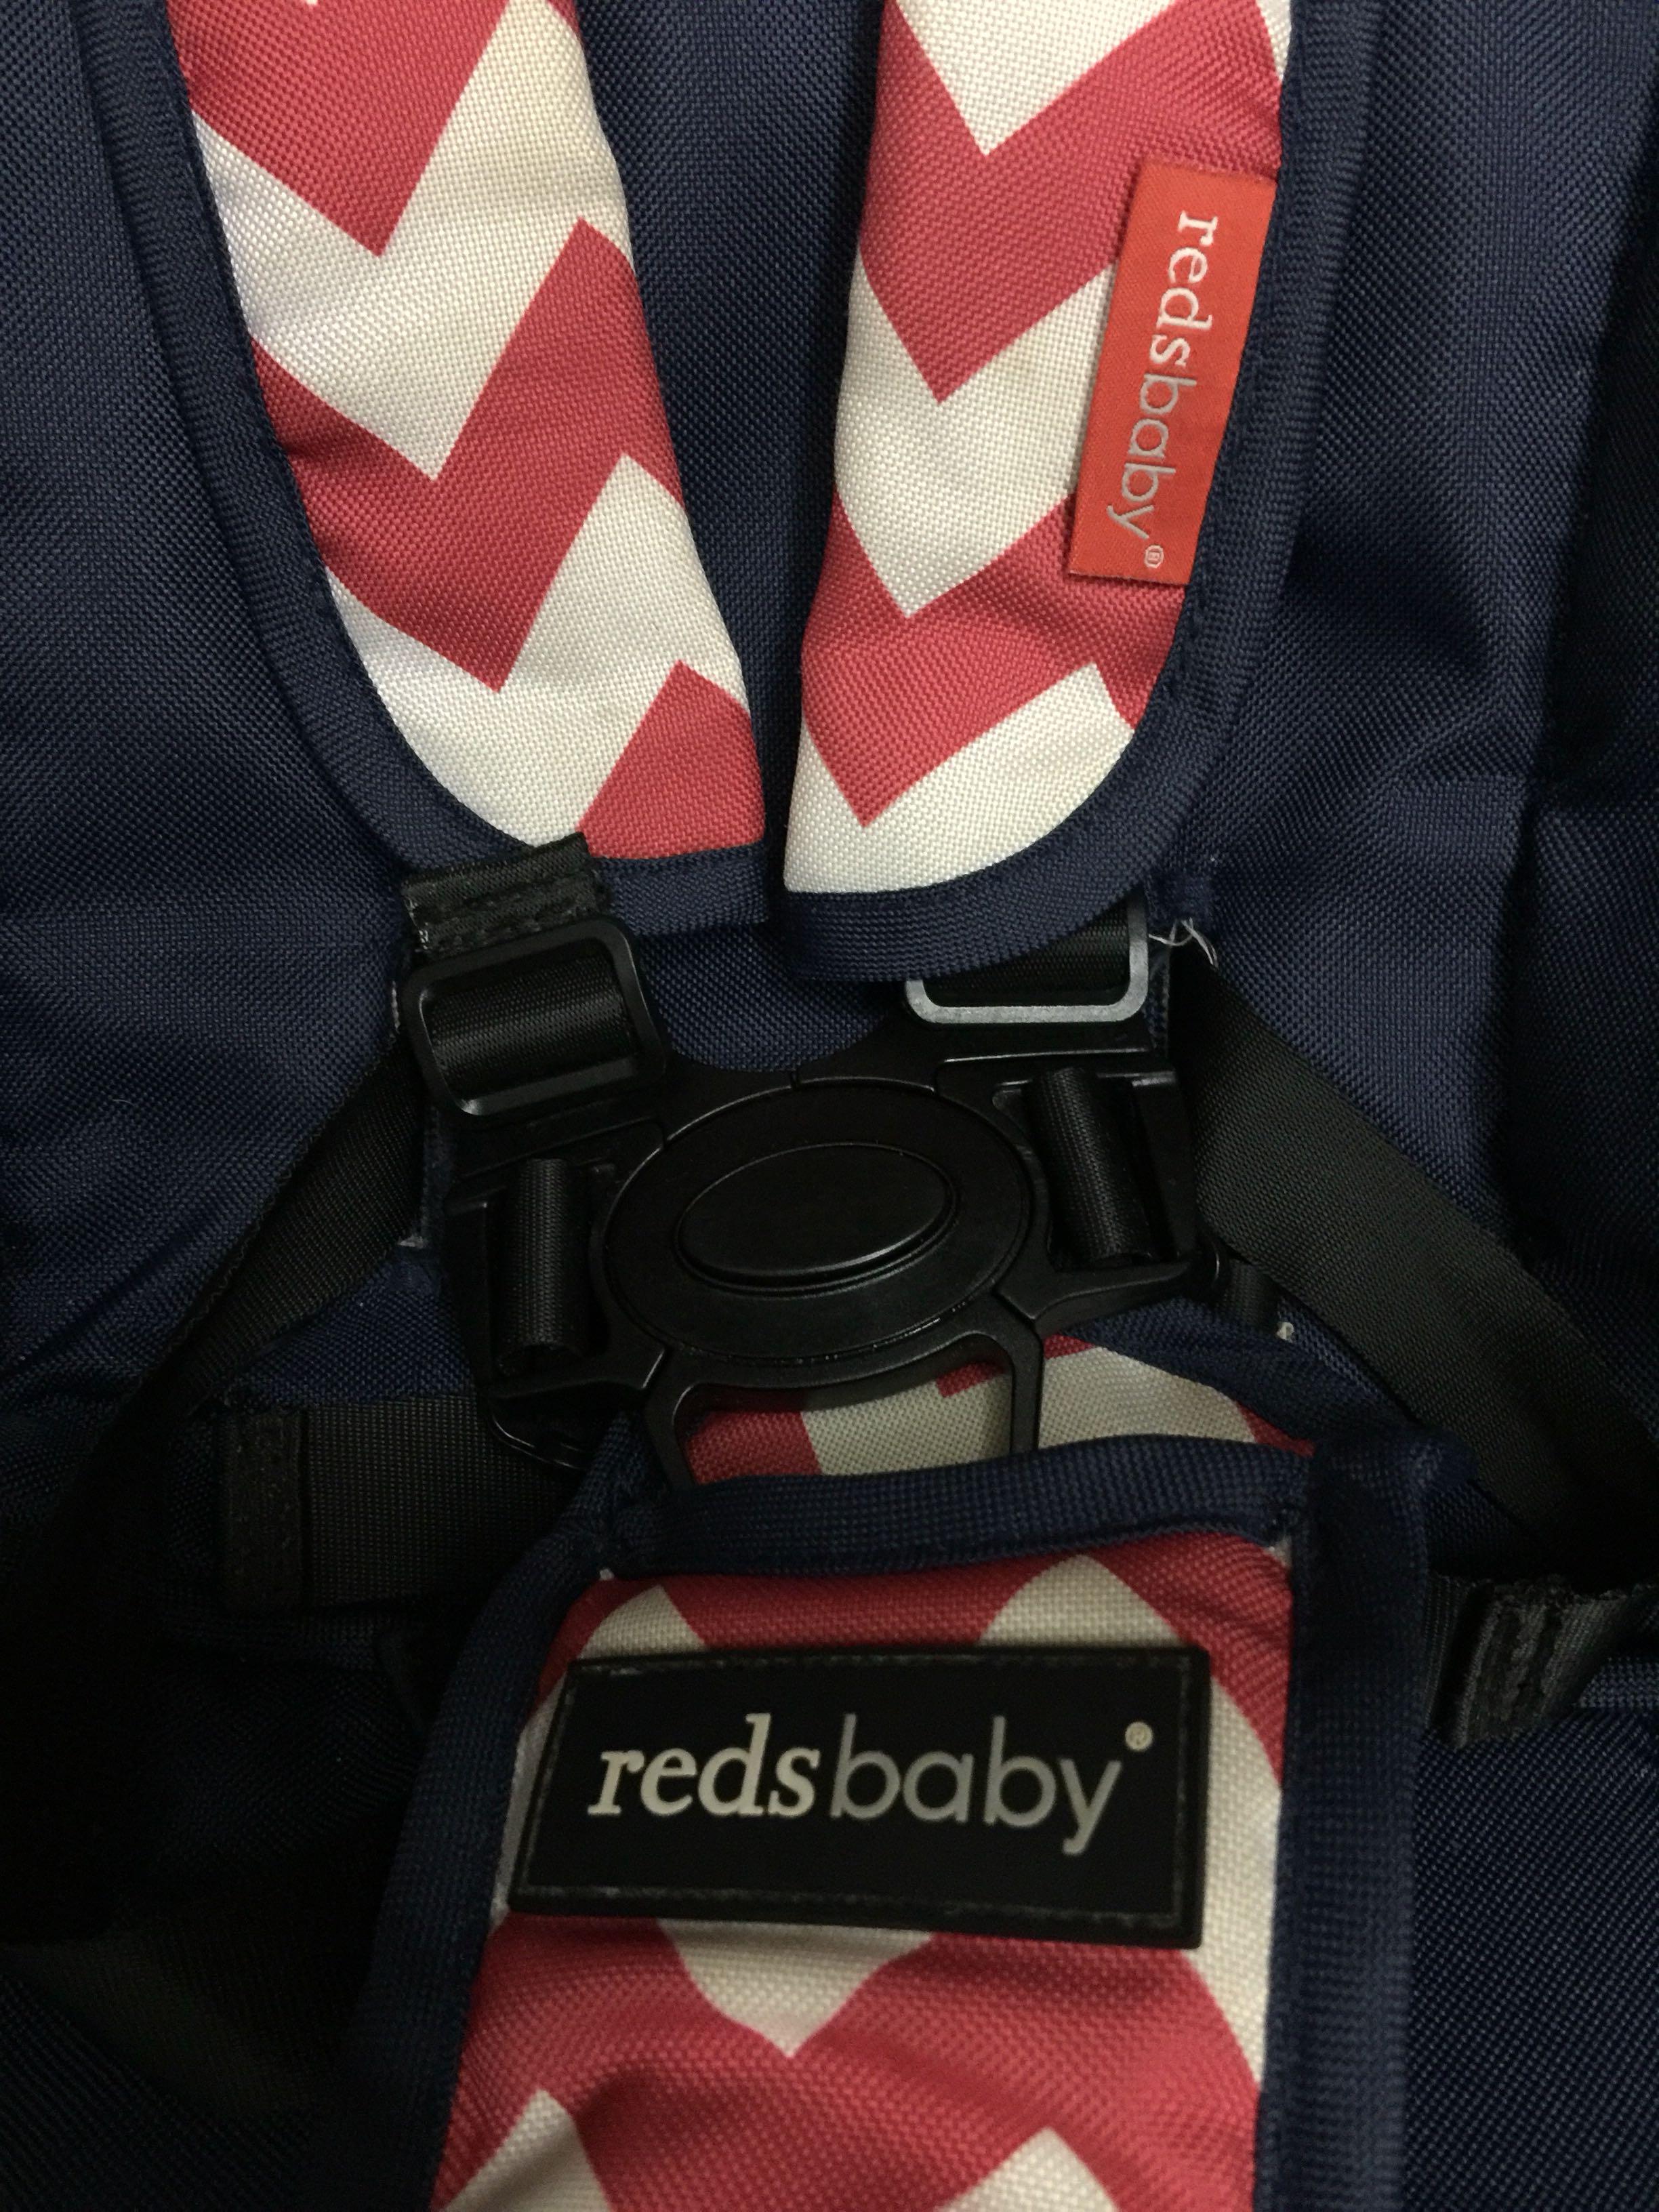 redsbaby pram bag